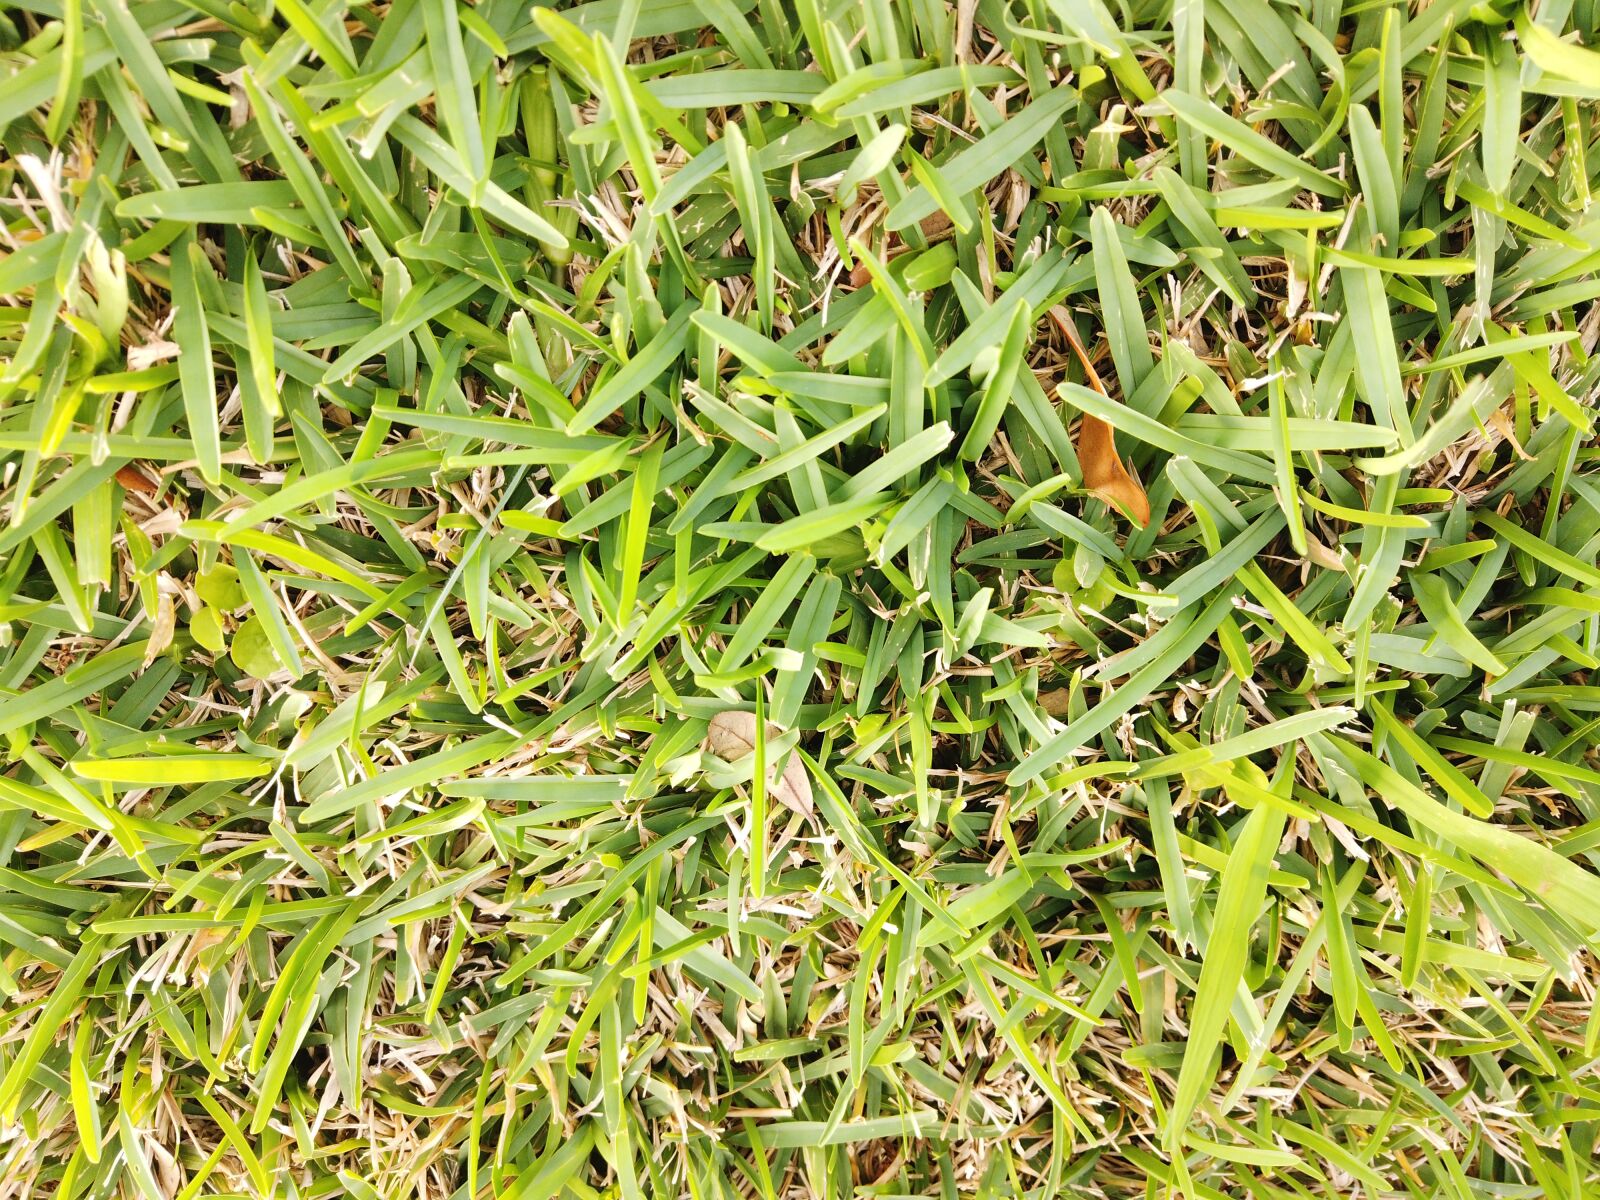 DJI Osmo Pocket sample photo. Grass, green, nature photography